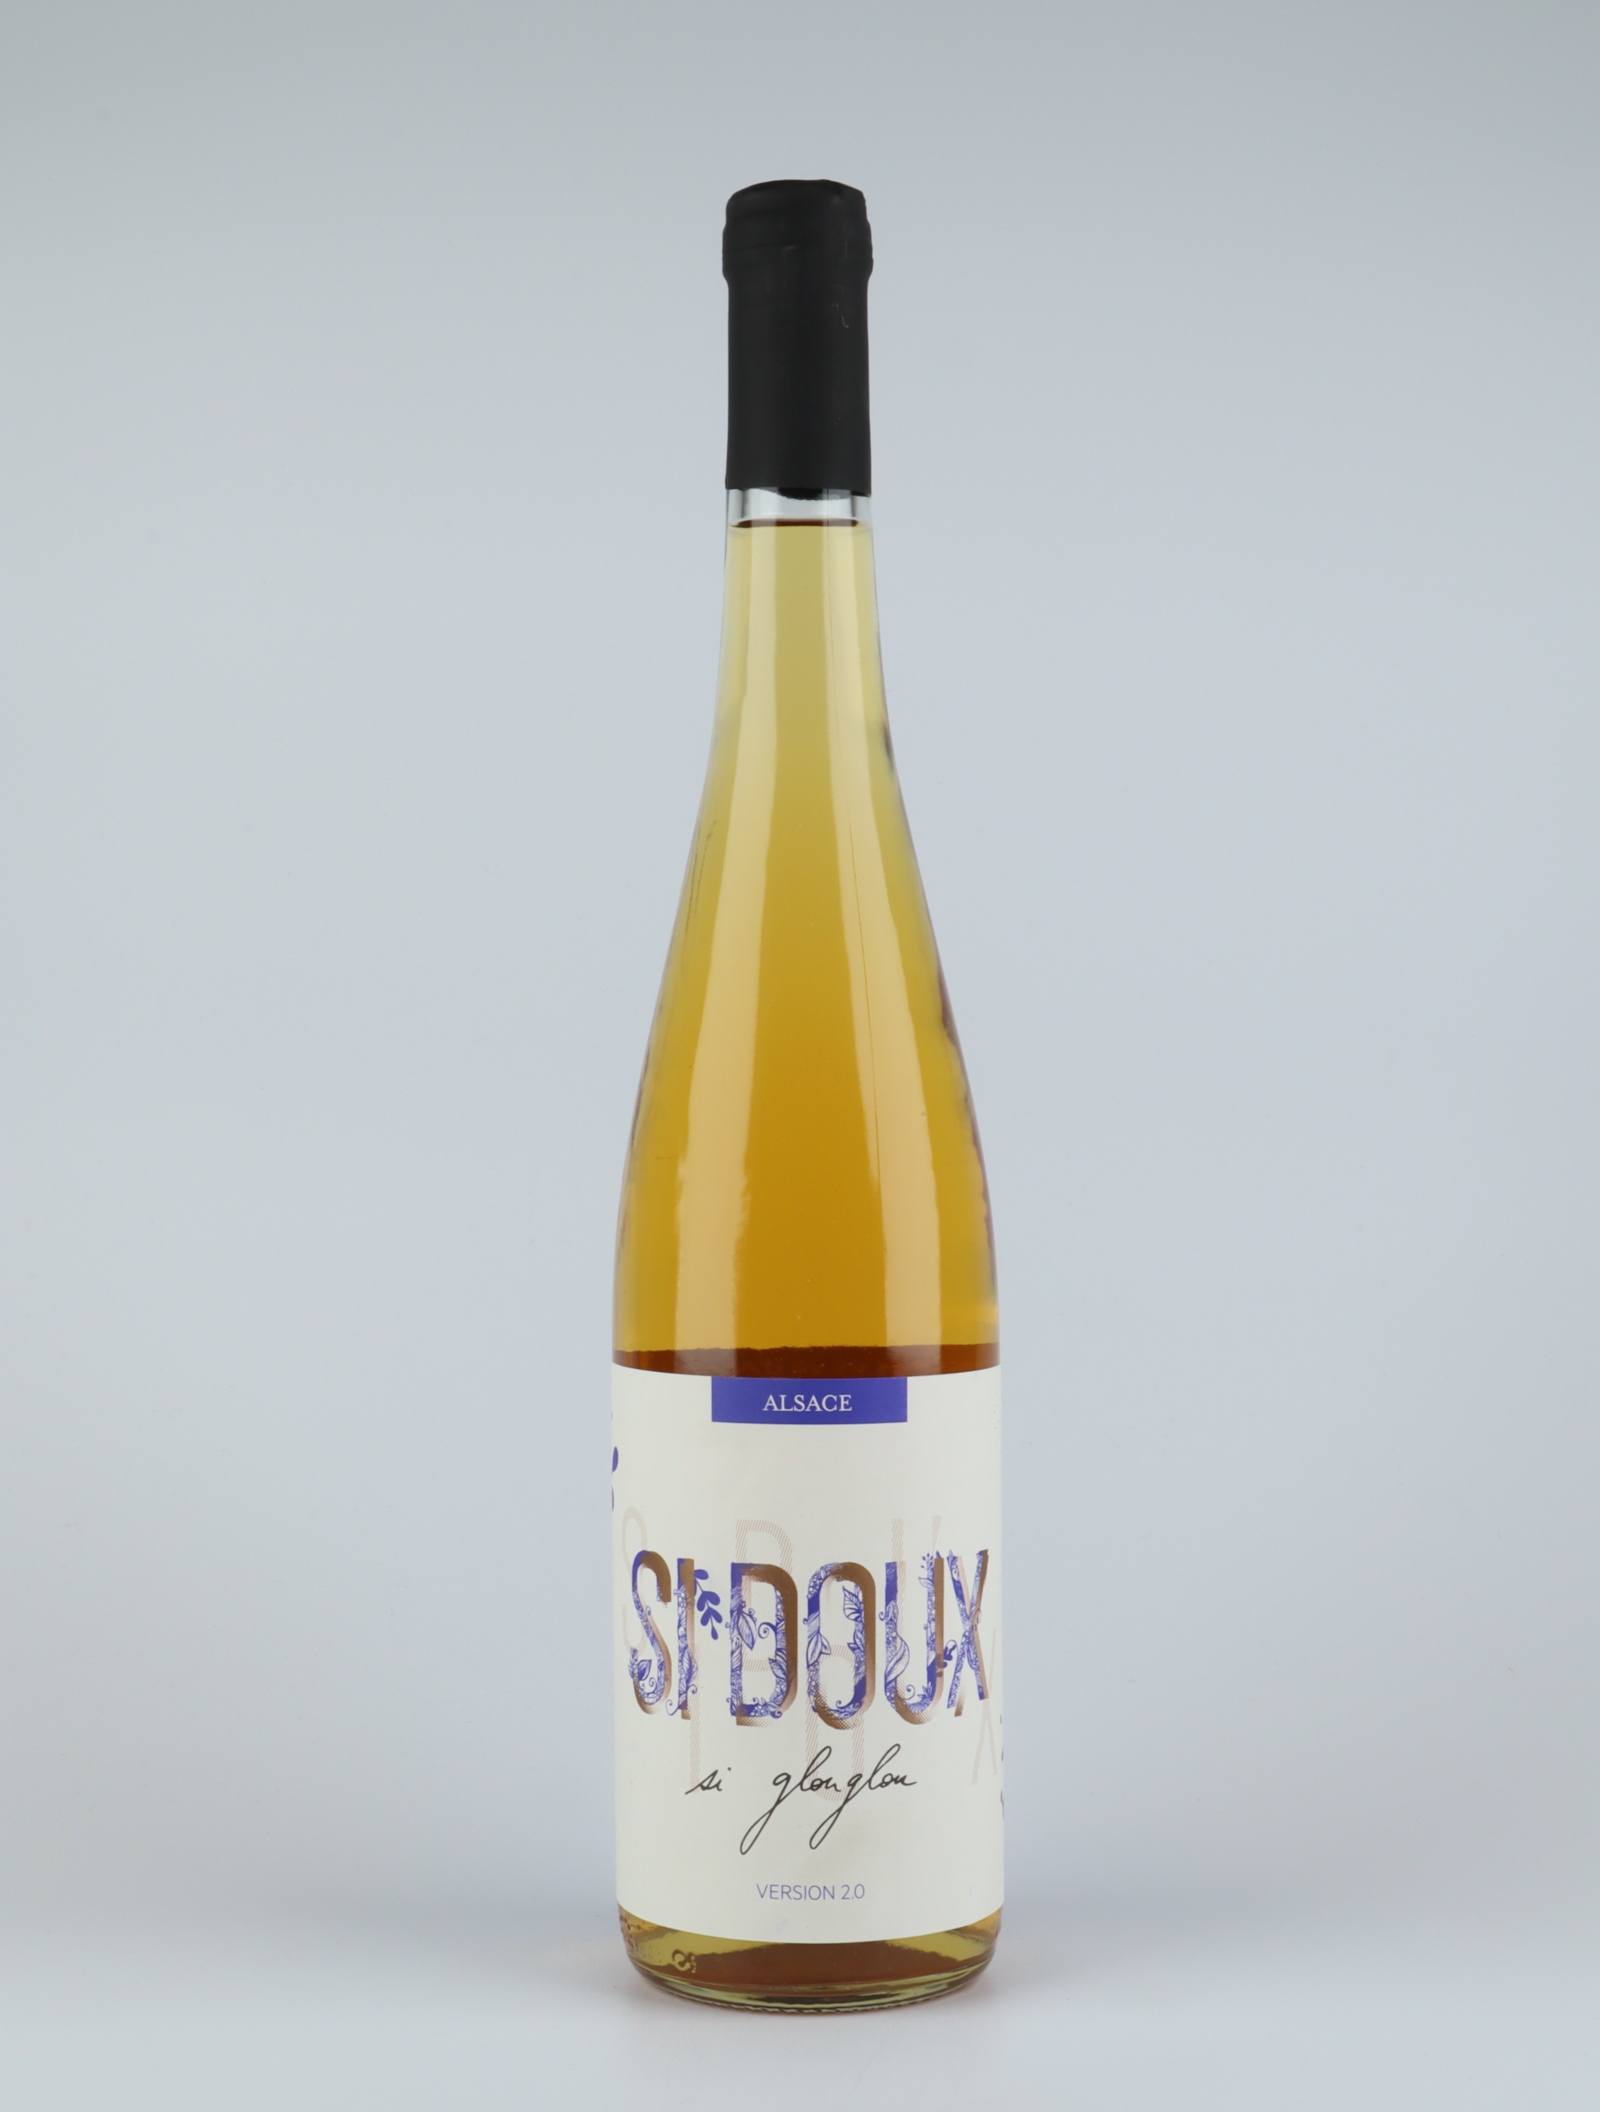 A bottle N.V. Si Doux Sweet wine from Domaine Christian Binner, Alsace in France